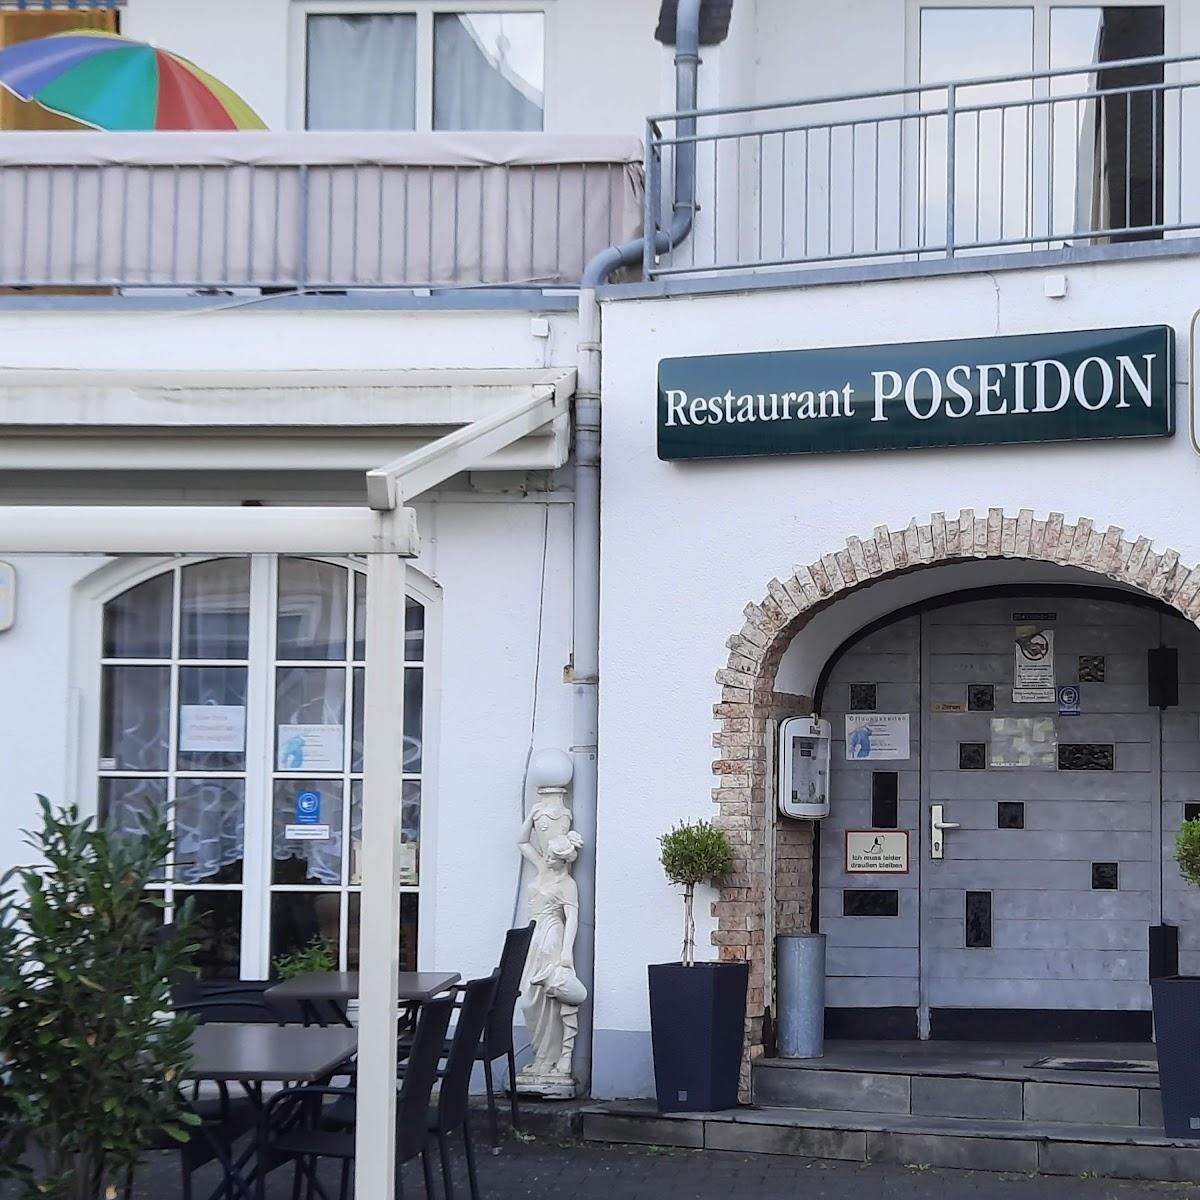 Restaurant "Restaurant POSEIDON" in Bernkastel-Kues